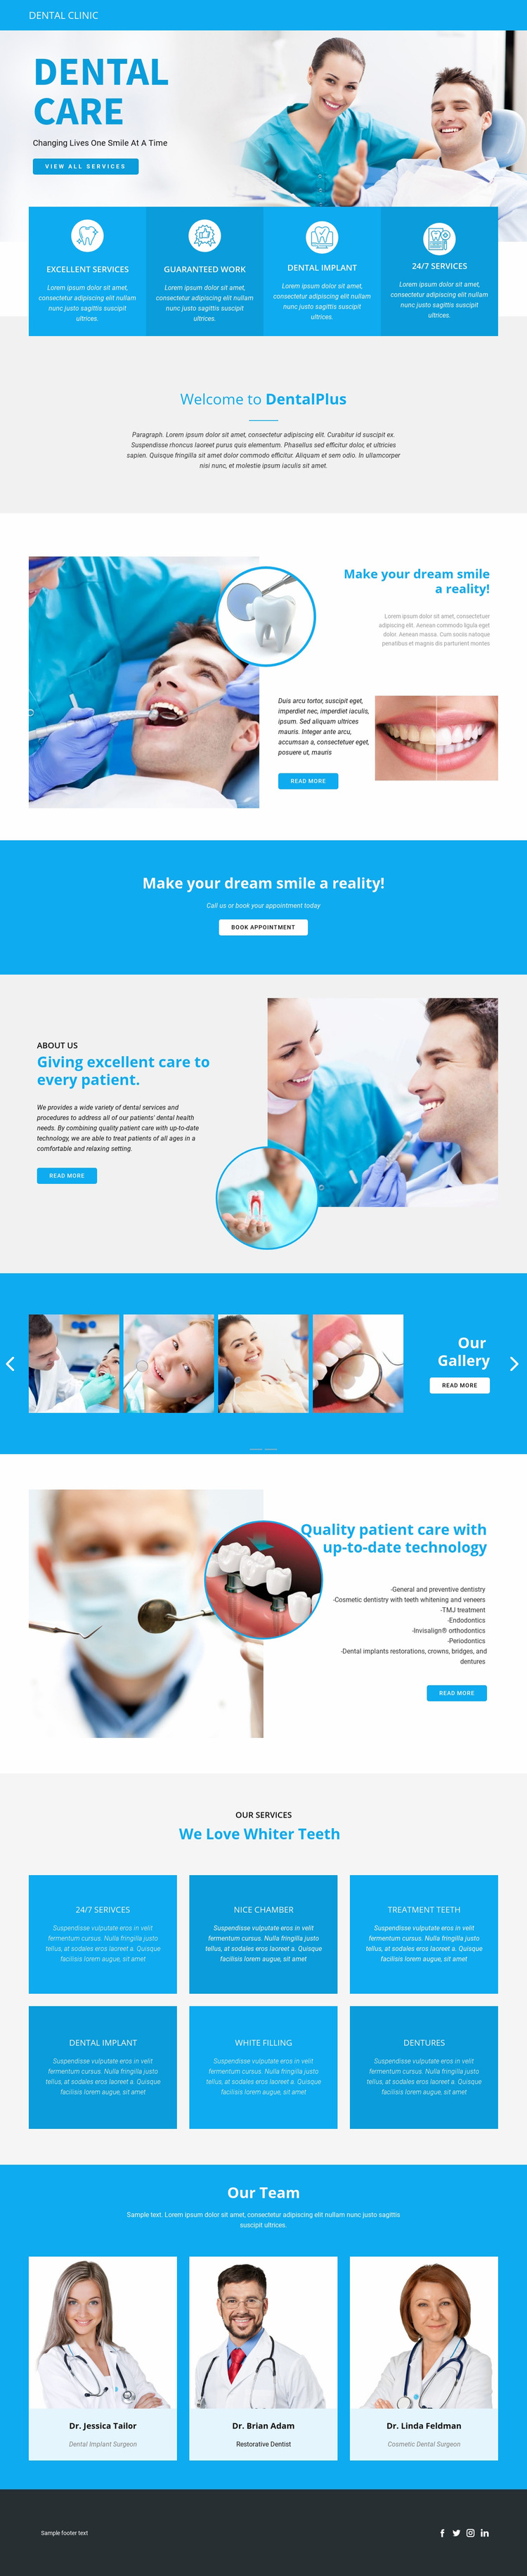 Dental care and medicine Web Page Design